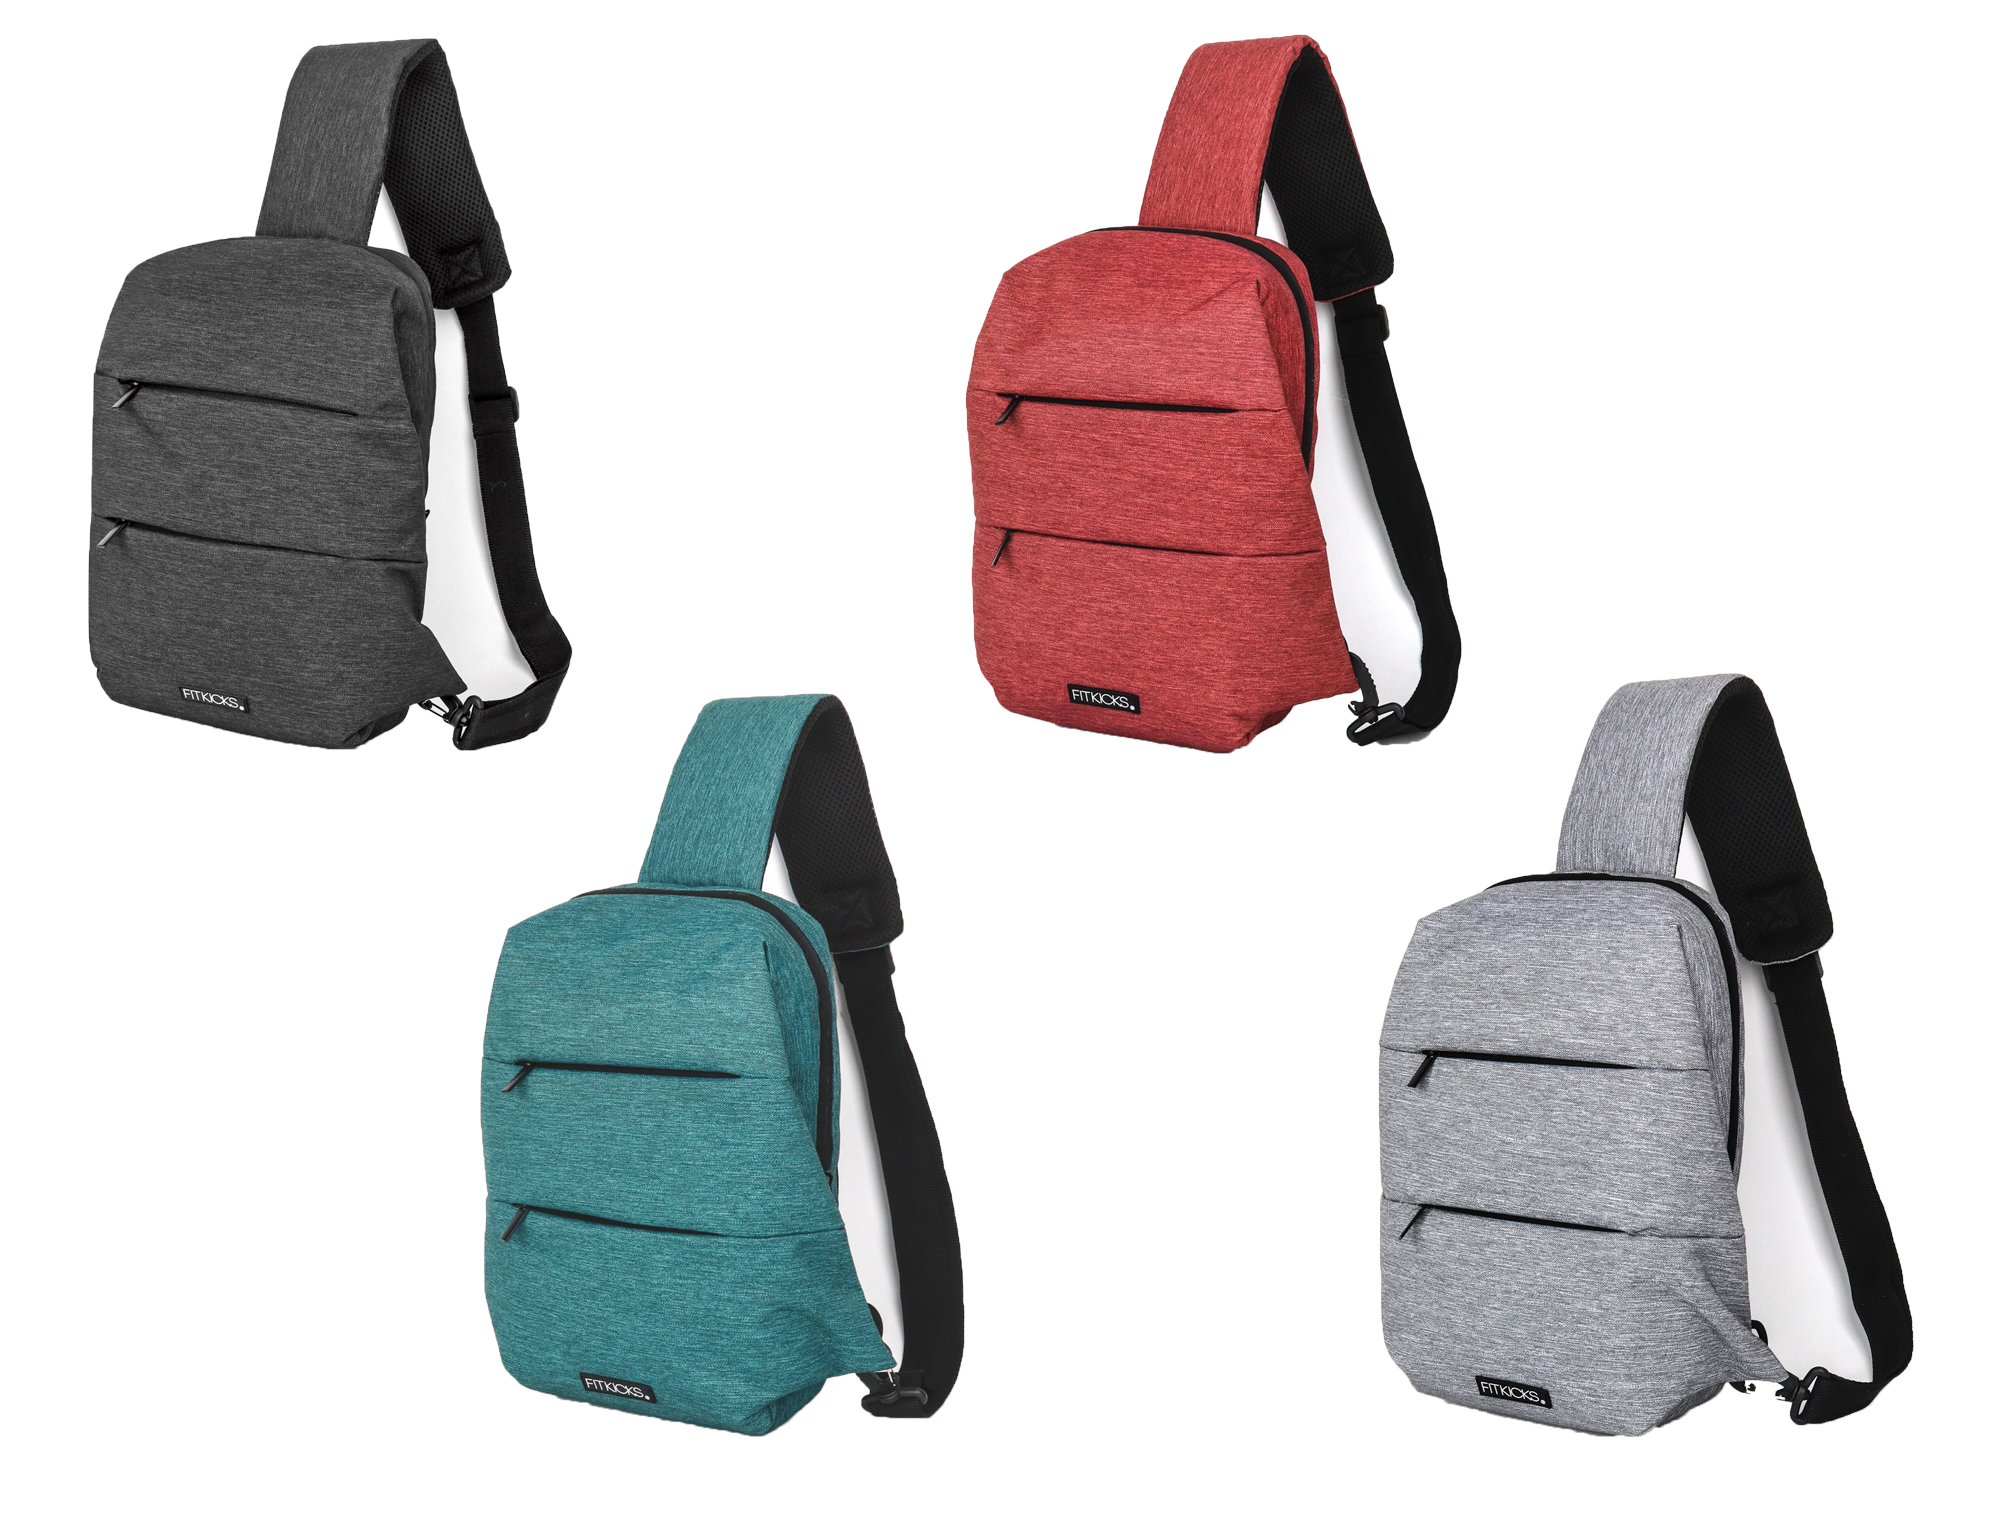 Unisex Cat Kick Earth Design Single Shoulder Sling Bag for Women & Men